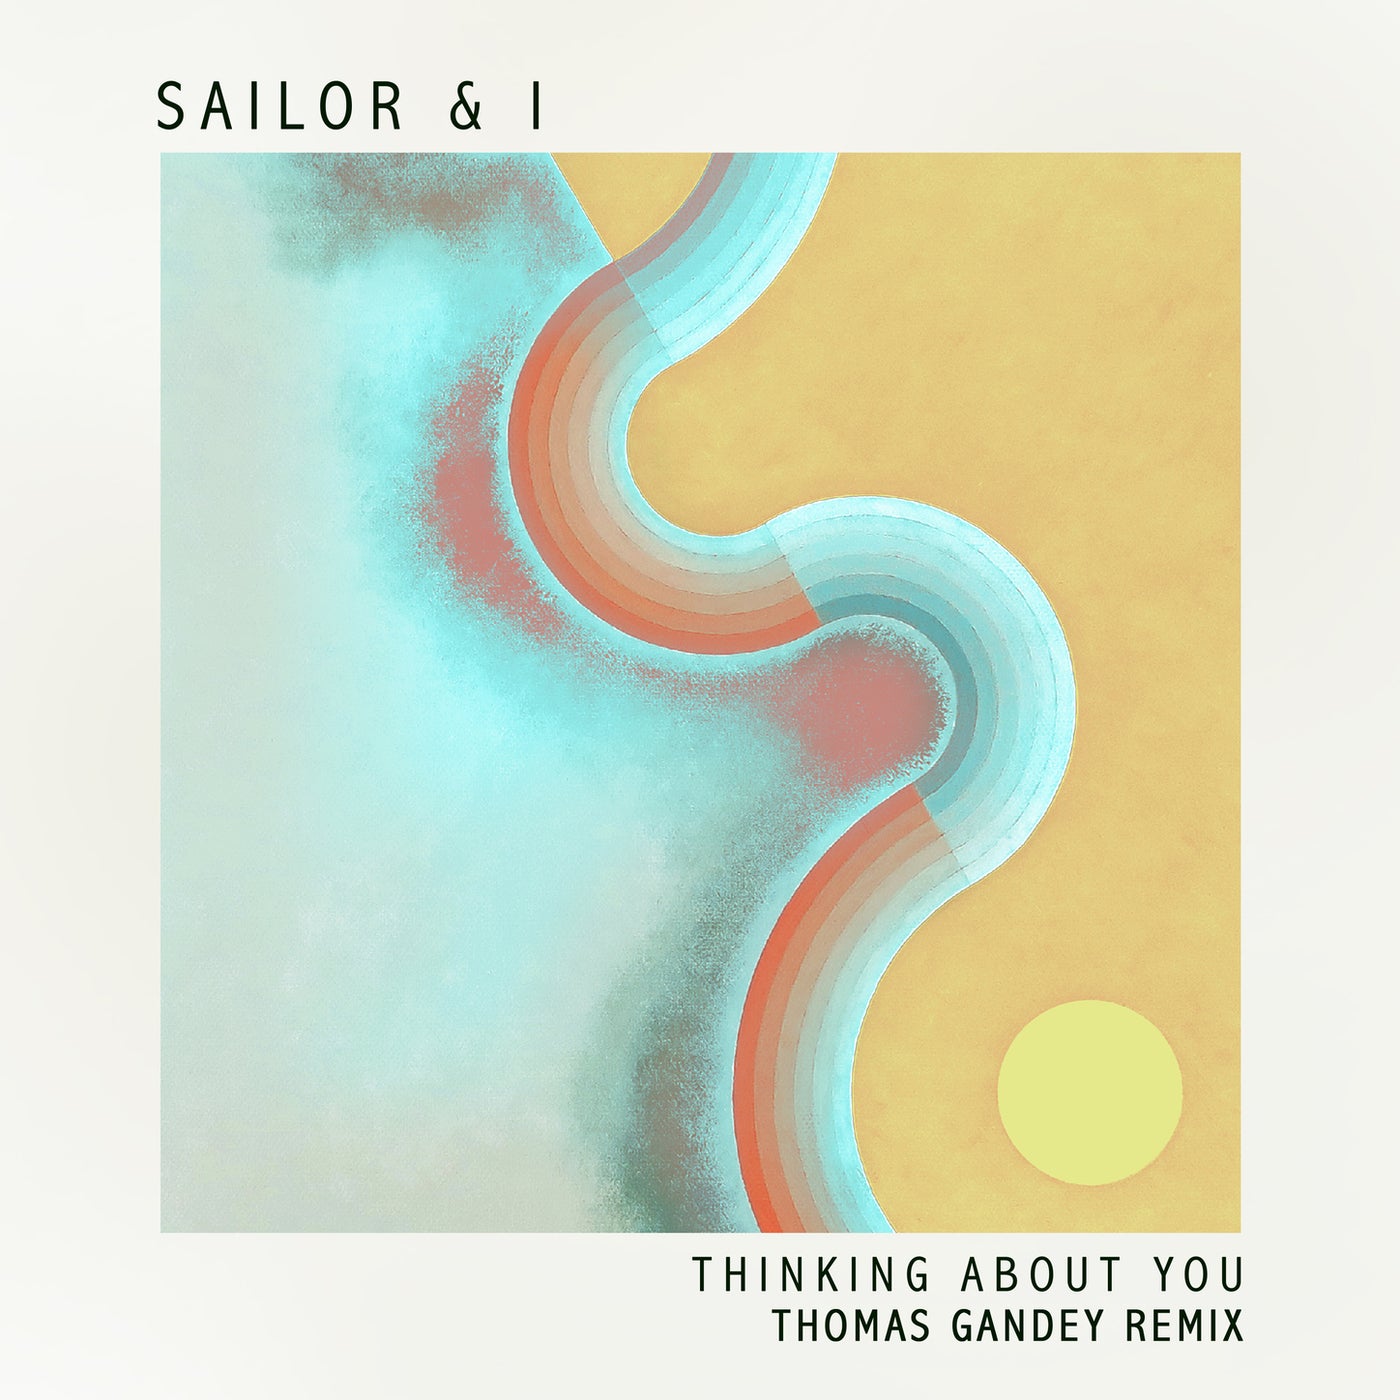 Sailor & I - Thinking About You (Thomas Gandey Remix) [MP014]